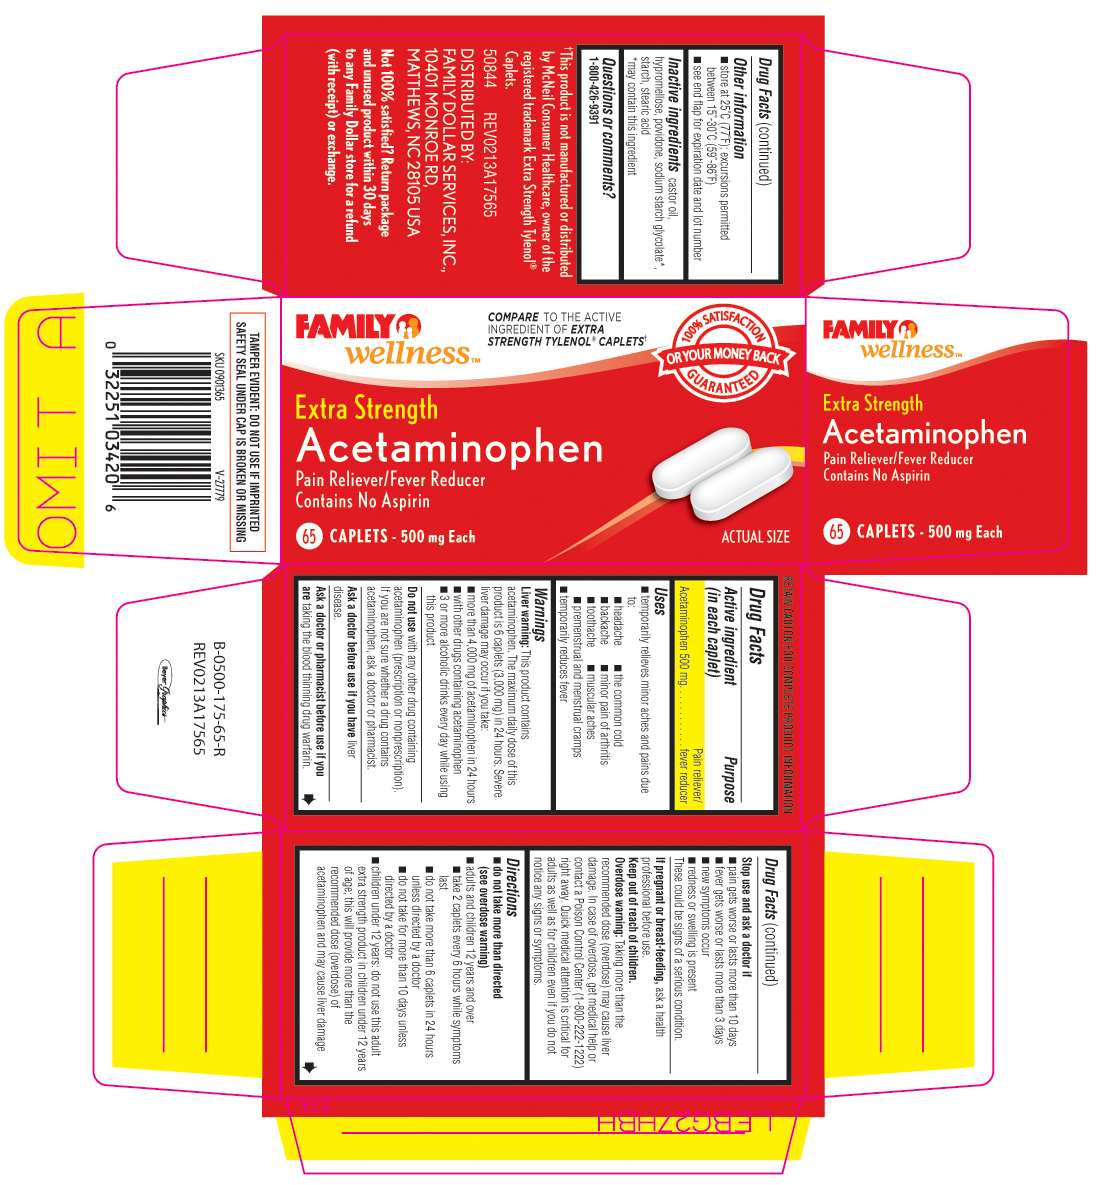 Extra Strength Acetaminophen